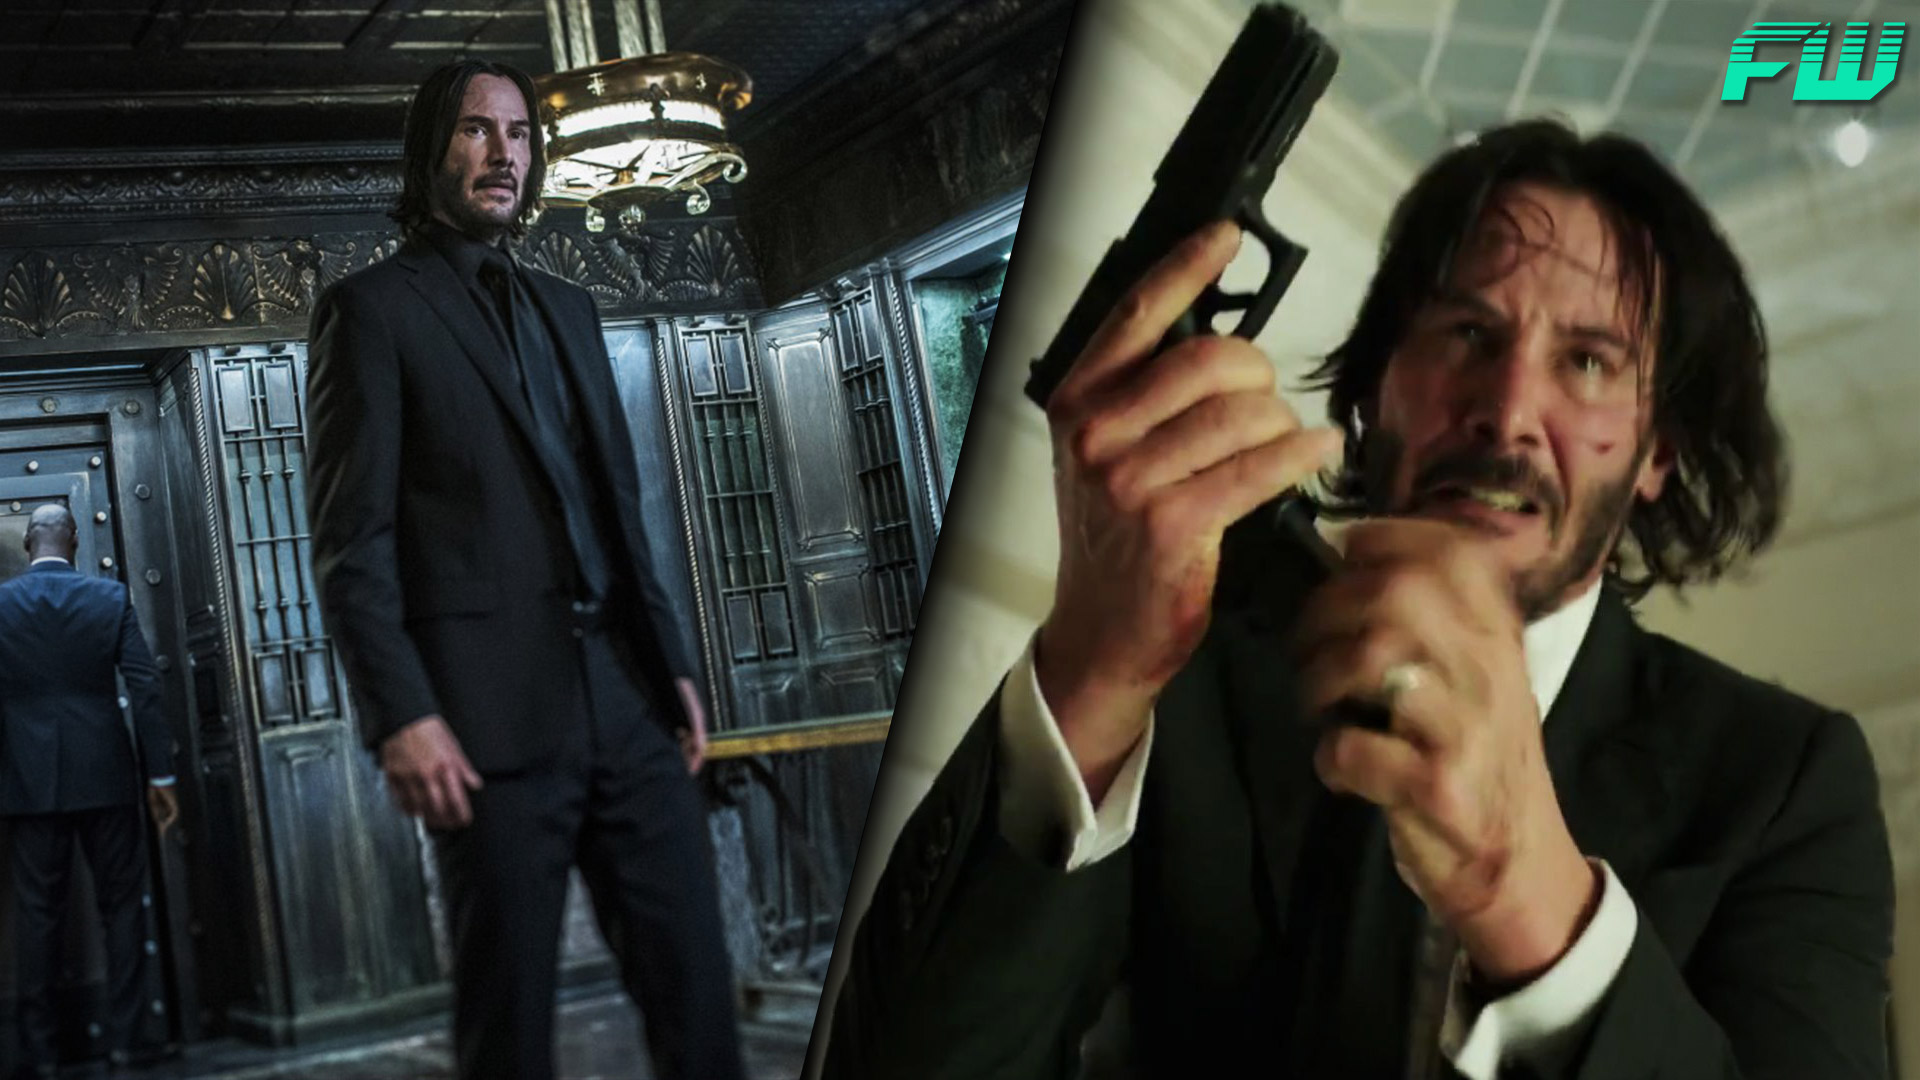  John Wick: 2-Film Collection : Keanu Reeves, Michael